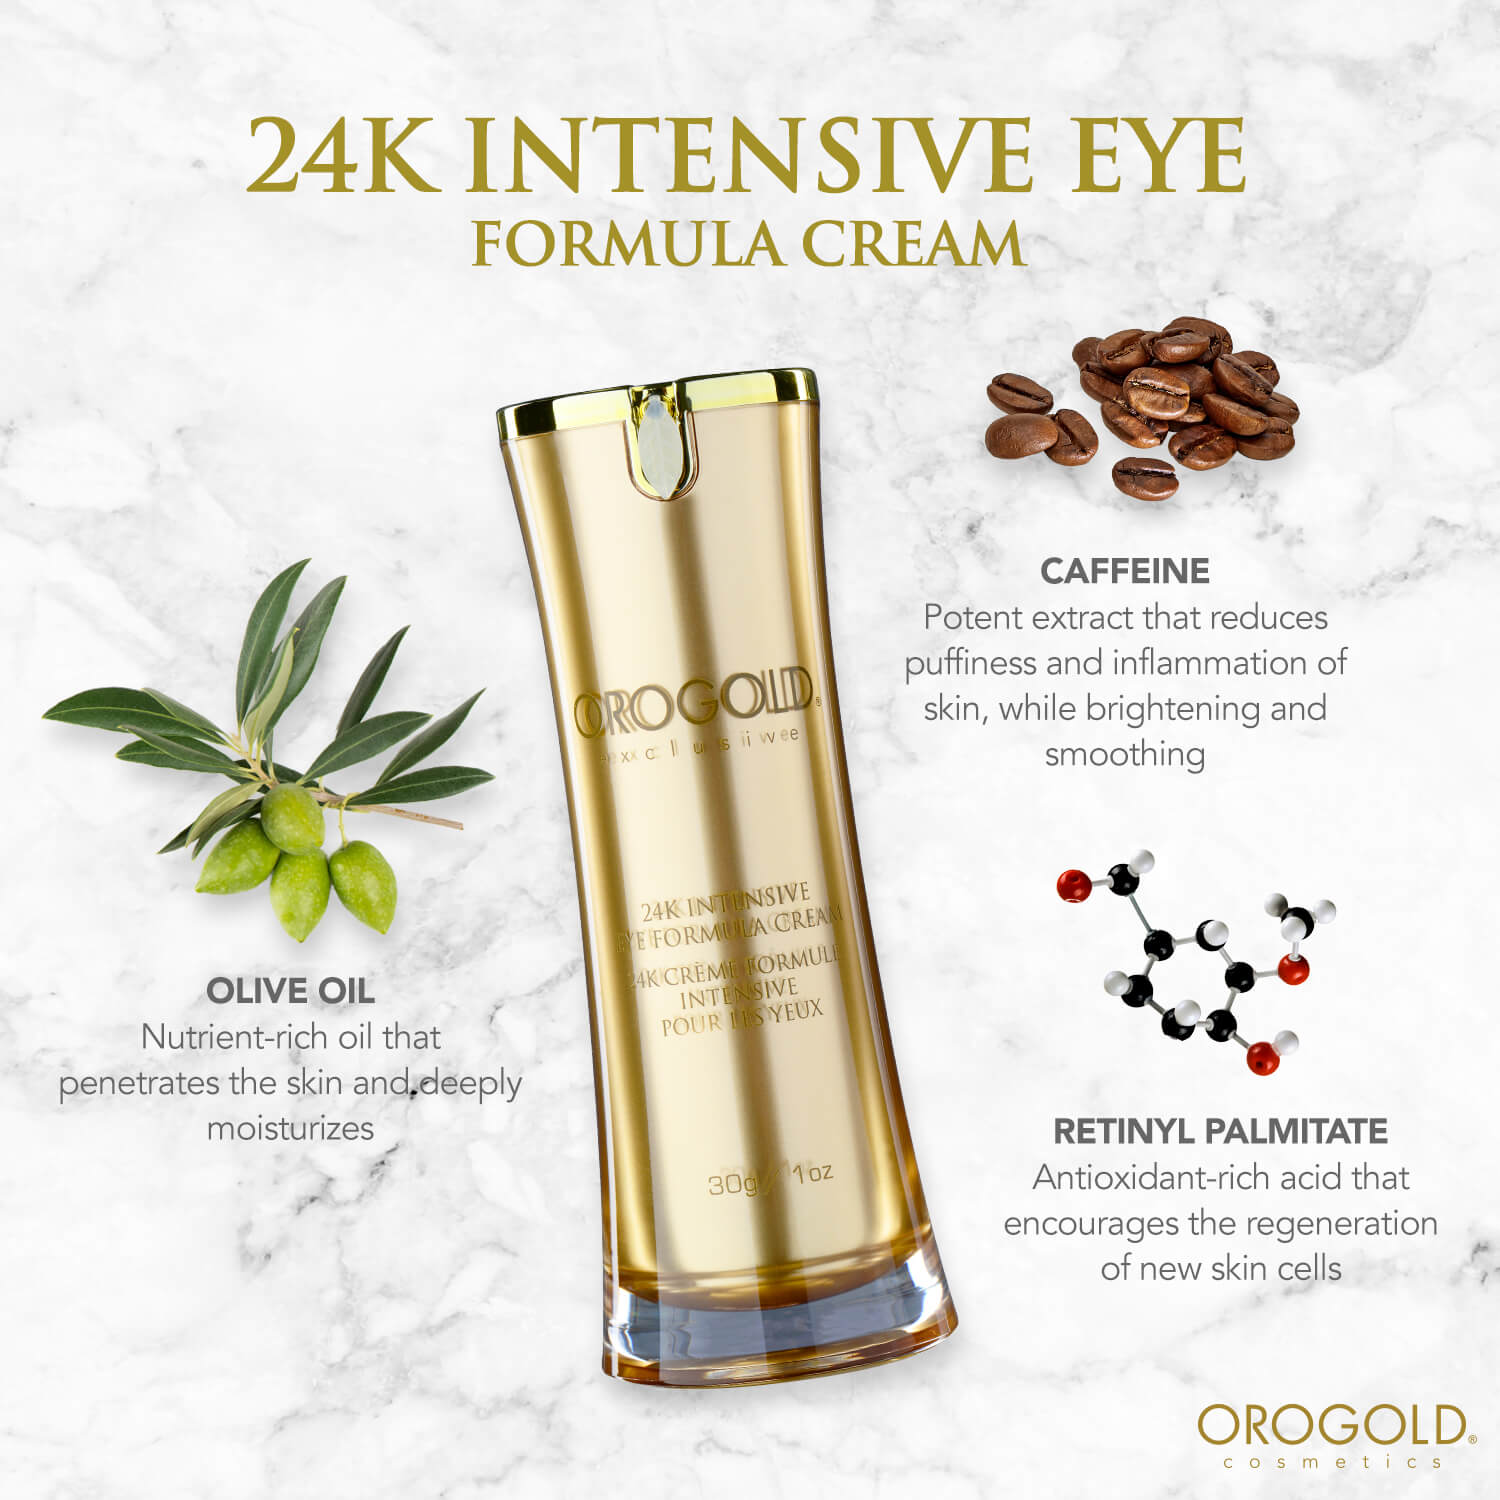 24K Intensive Eye Formula Cream